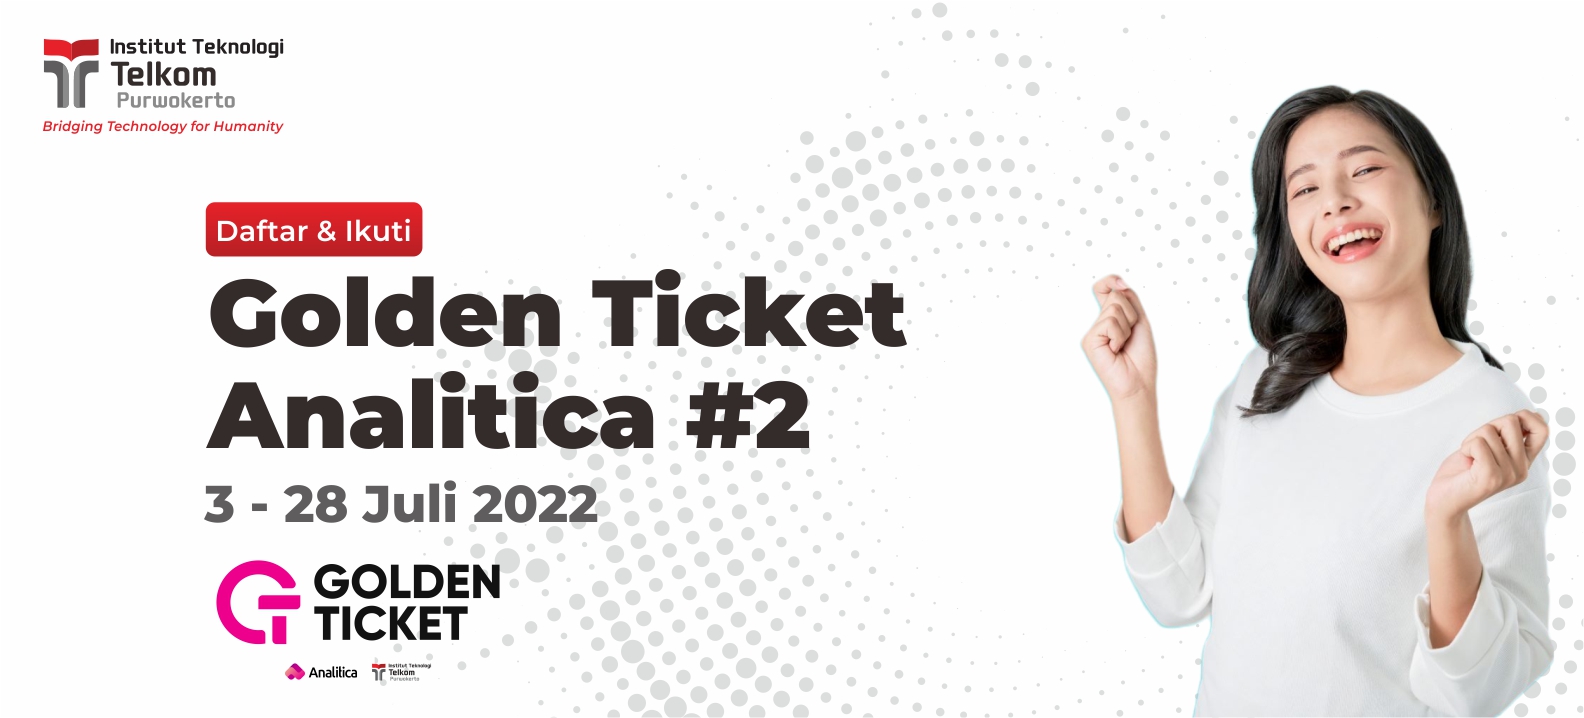 Analitica Kembali Buka Golden Ticket #2 Untuk Siswa/i Indonesia.